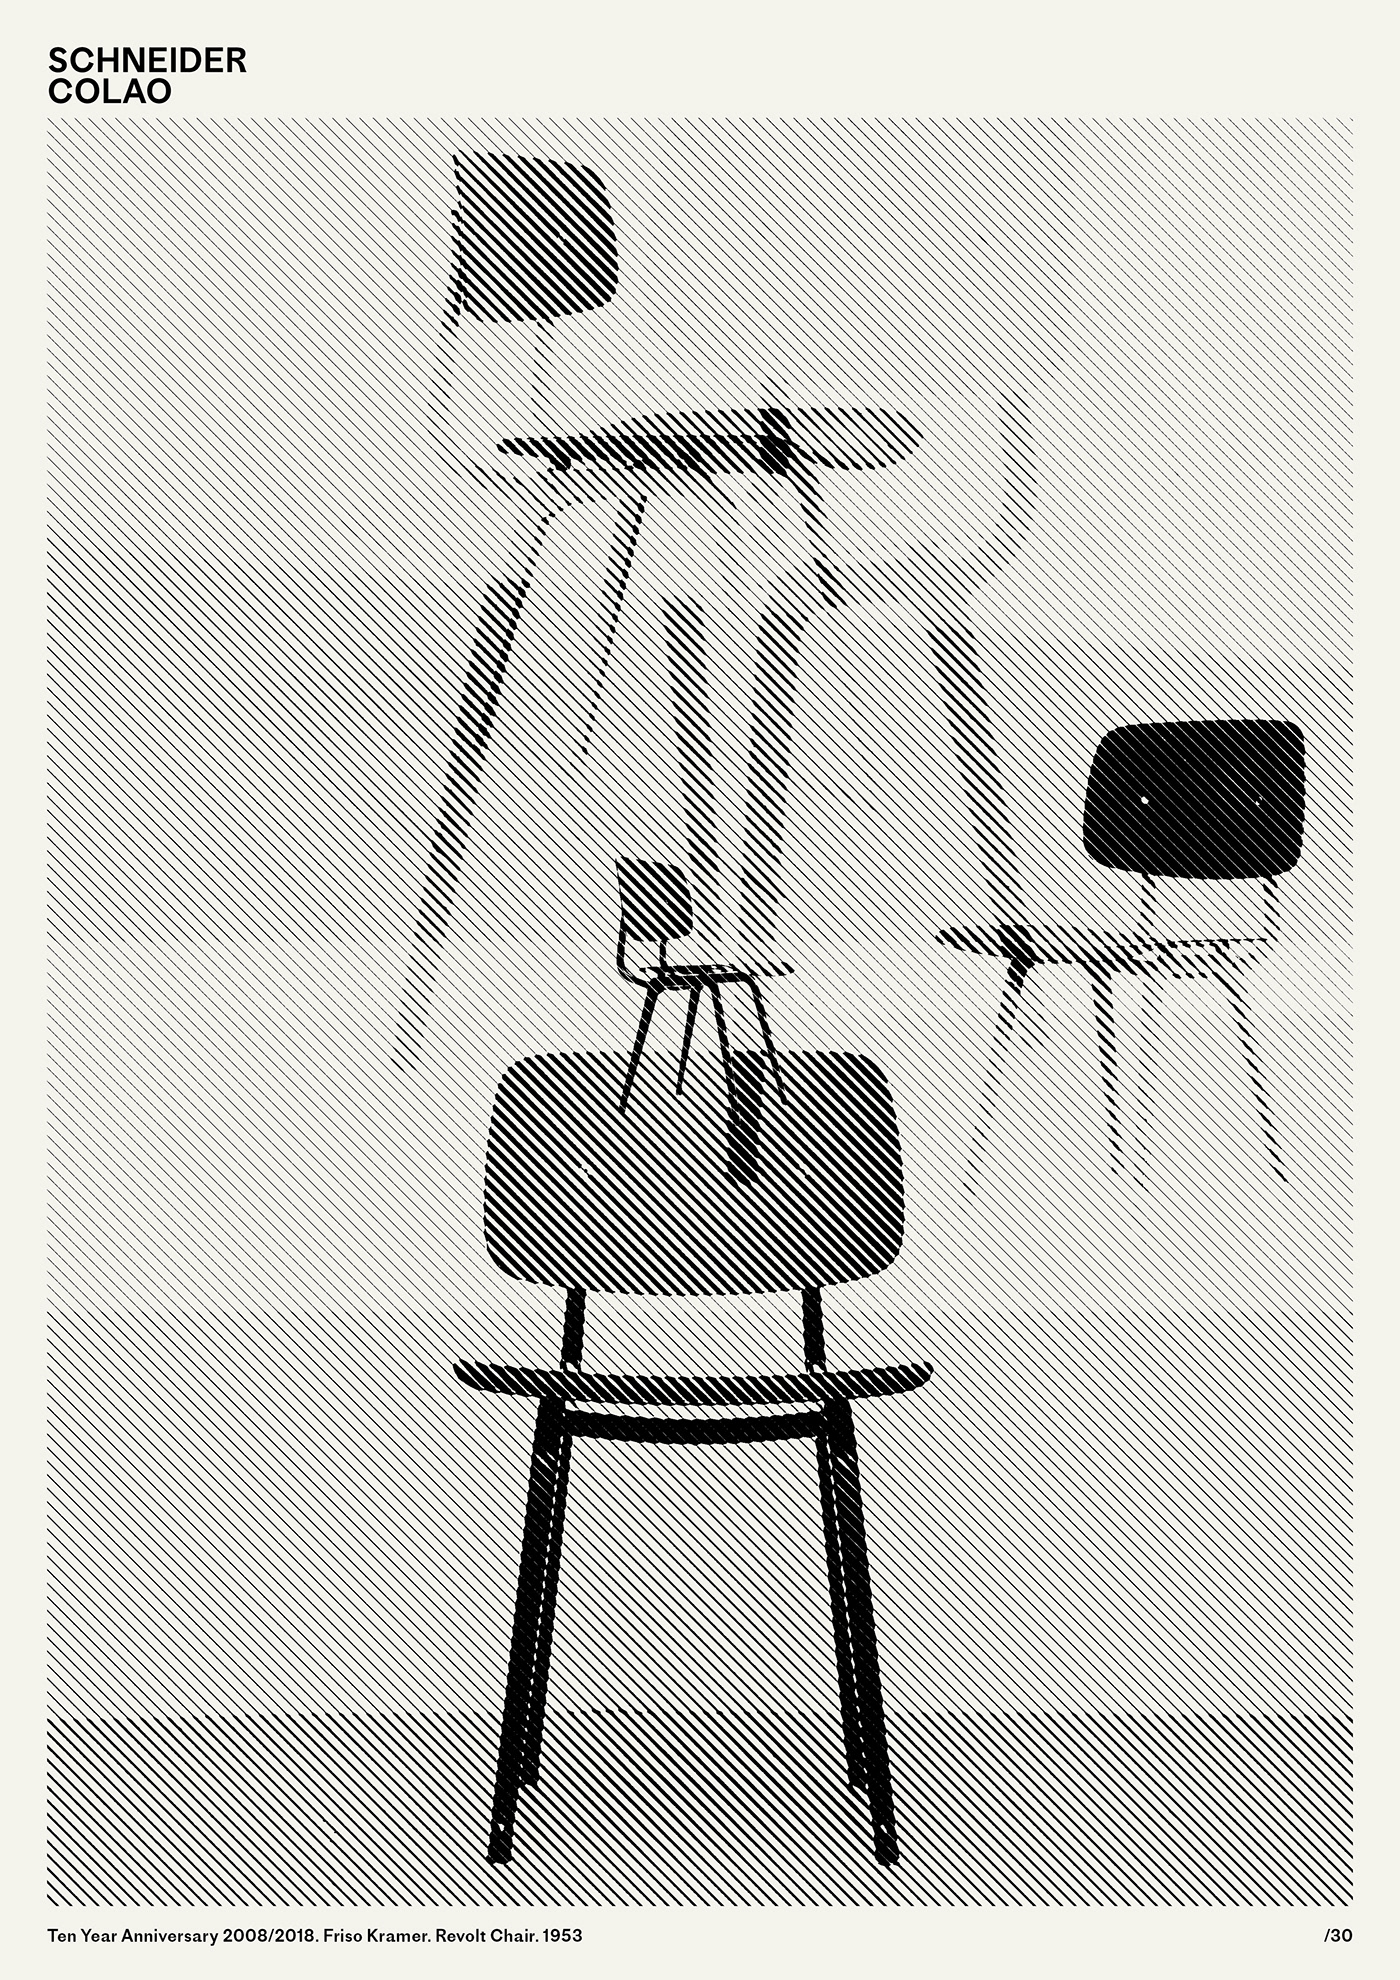 Jeffrey Ludlow Point of Reference Gallery Branding modernist furniture Scheiner Colao Social Media Strategy Poster Design Instagram Design